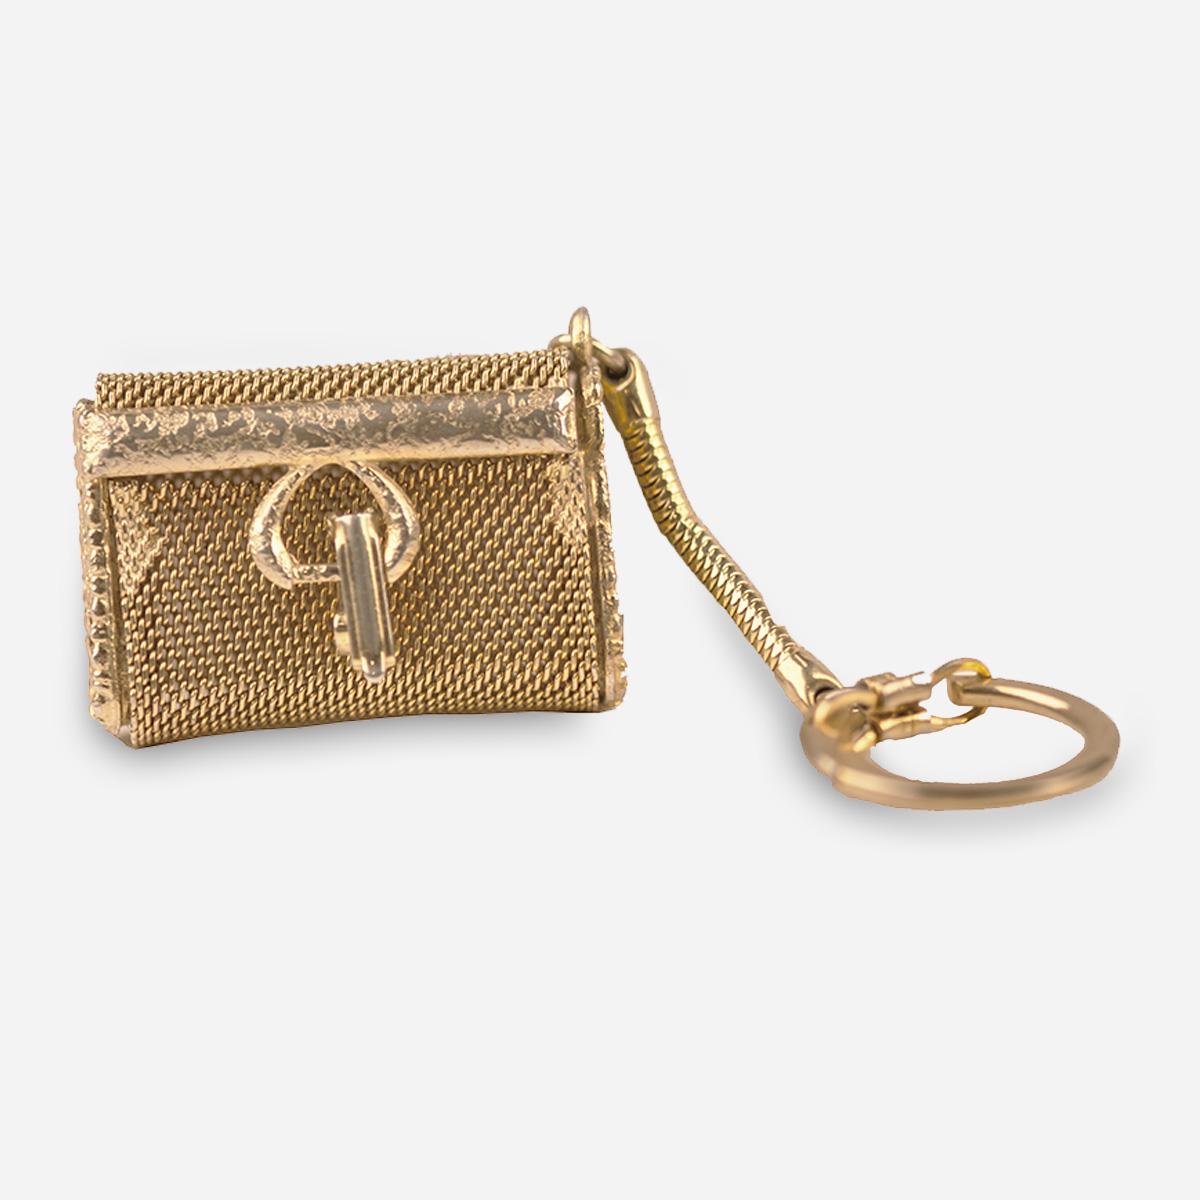 Gold Metal mesh handbag keychain